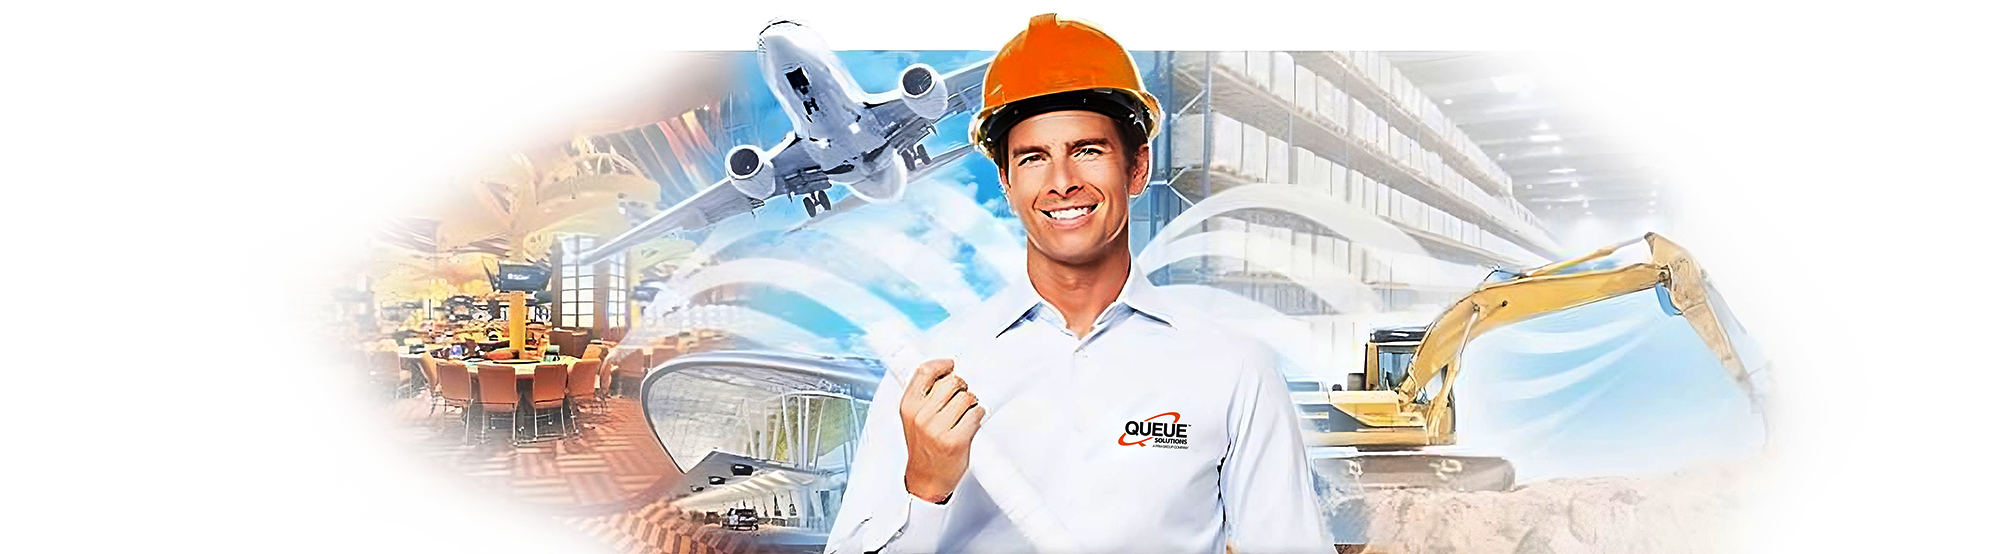 Engineer Image